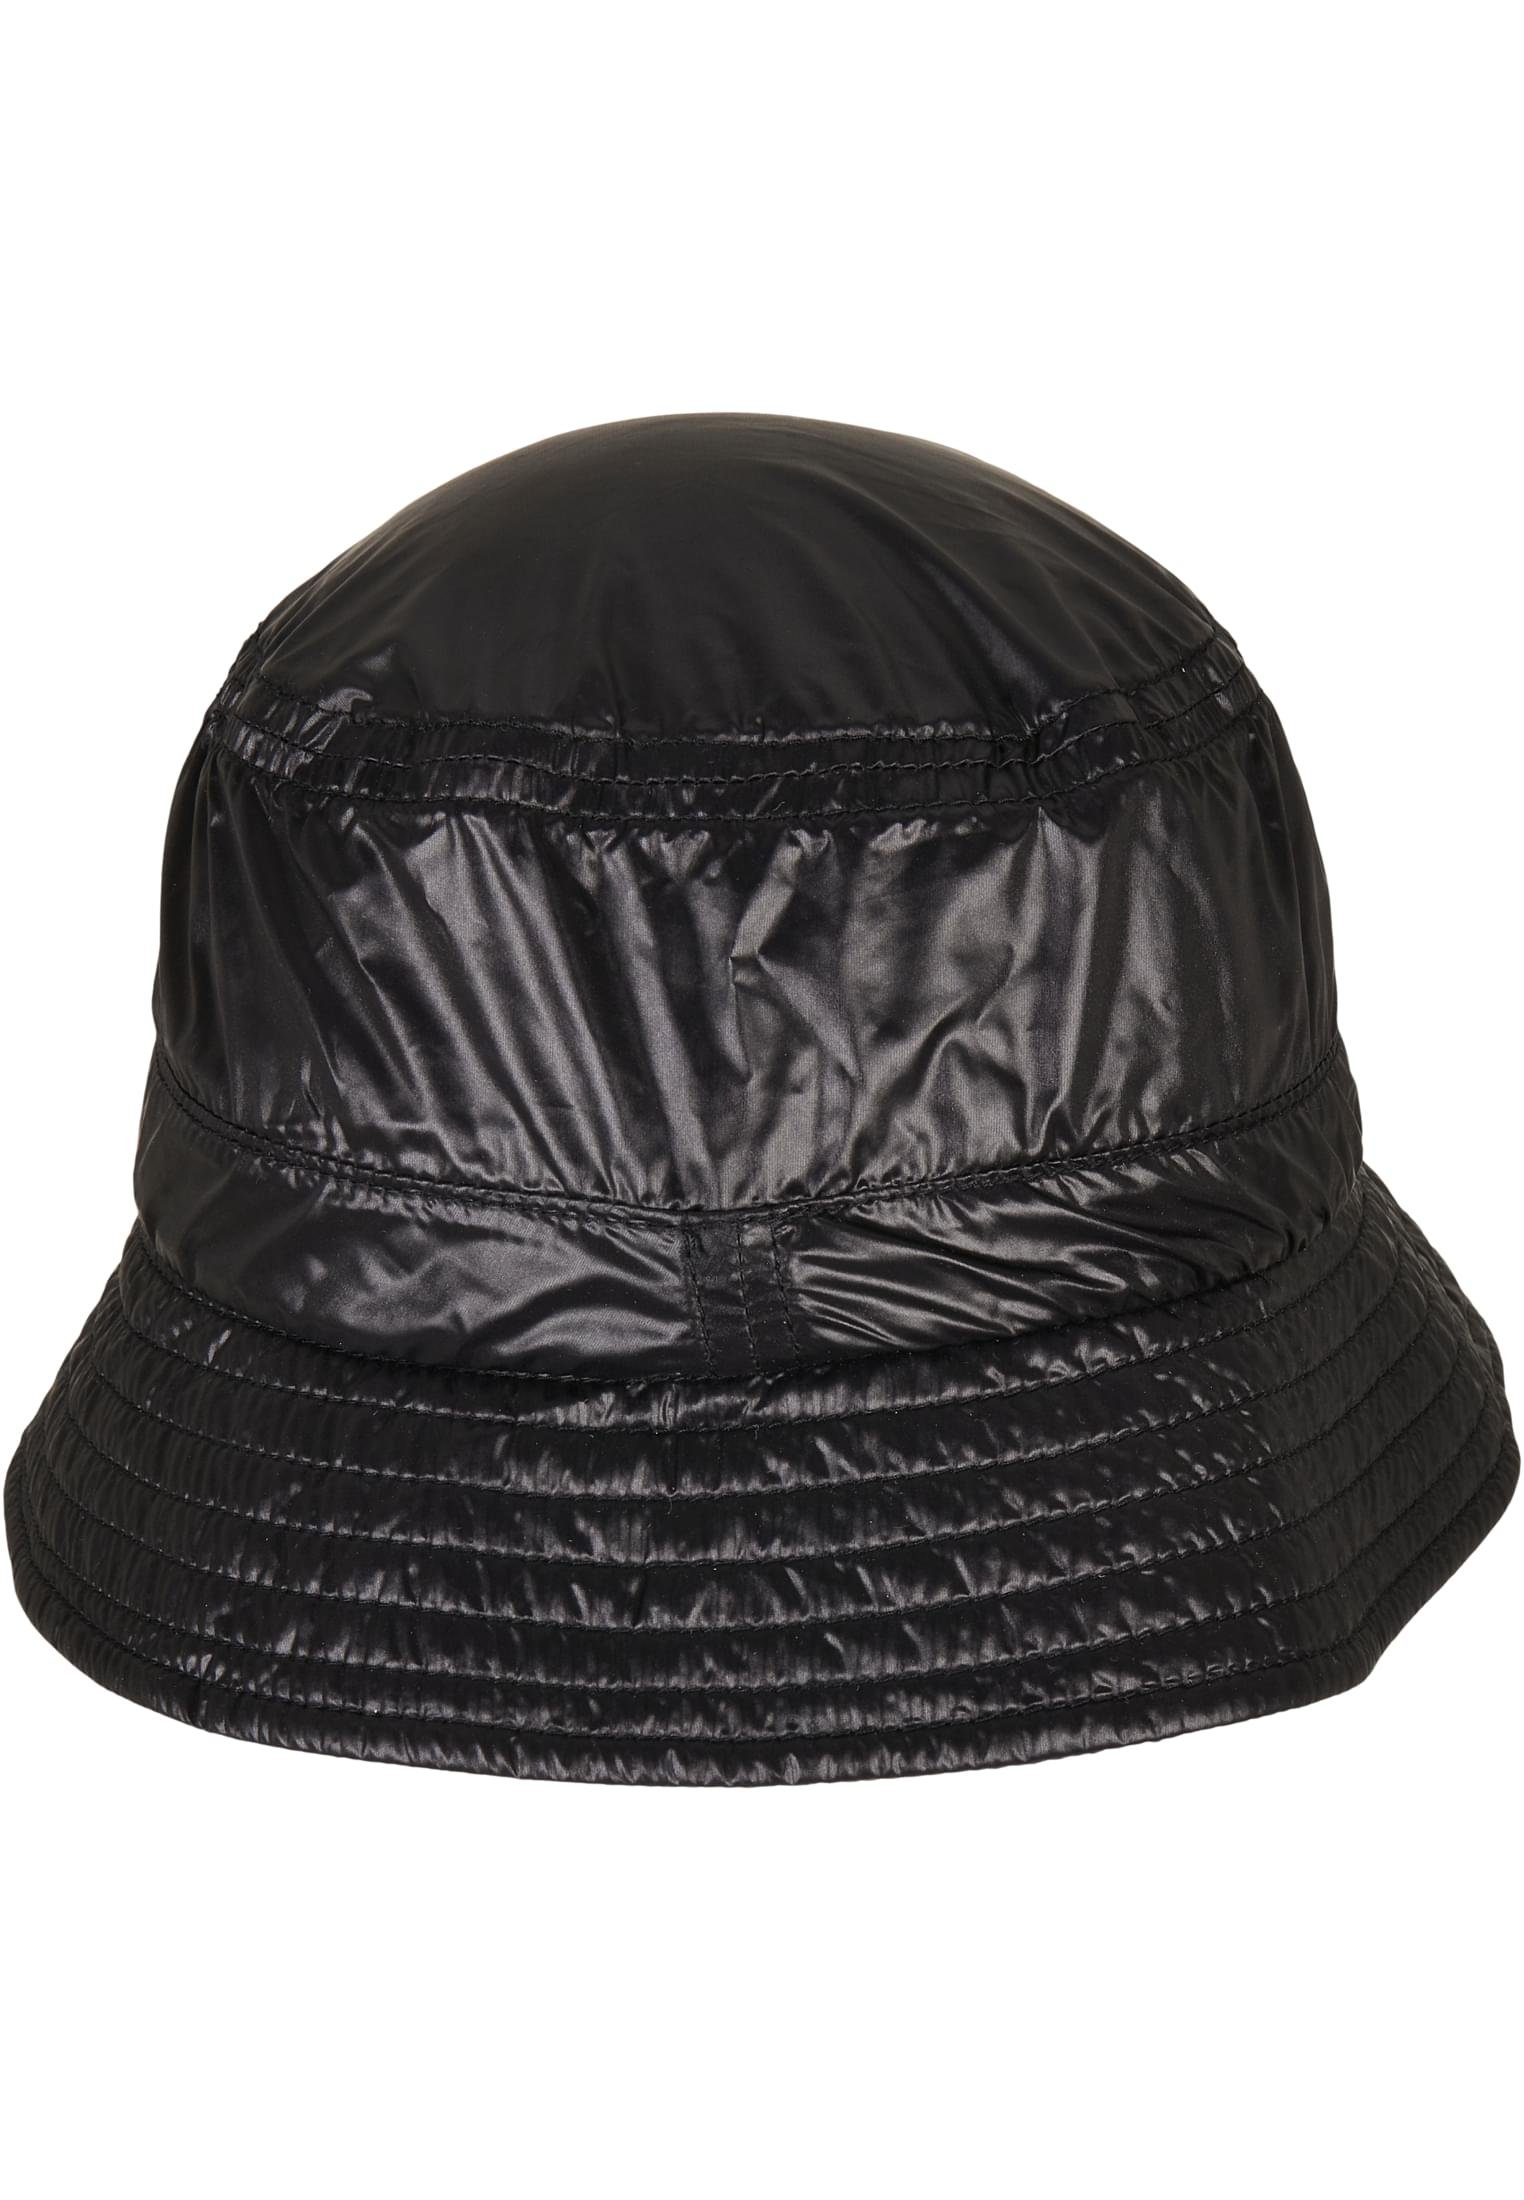 Accessoires Nylon Light Hat Flex Flexfit Bucket Cap